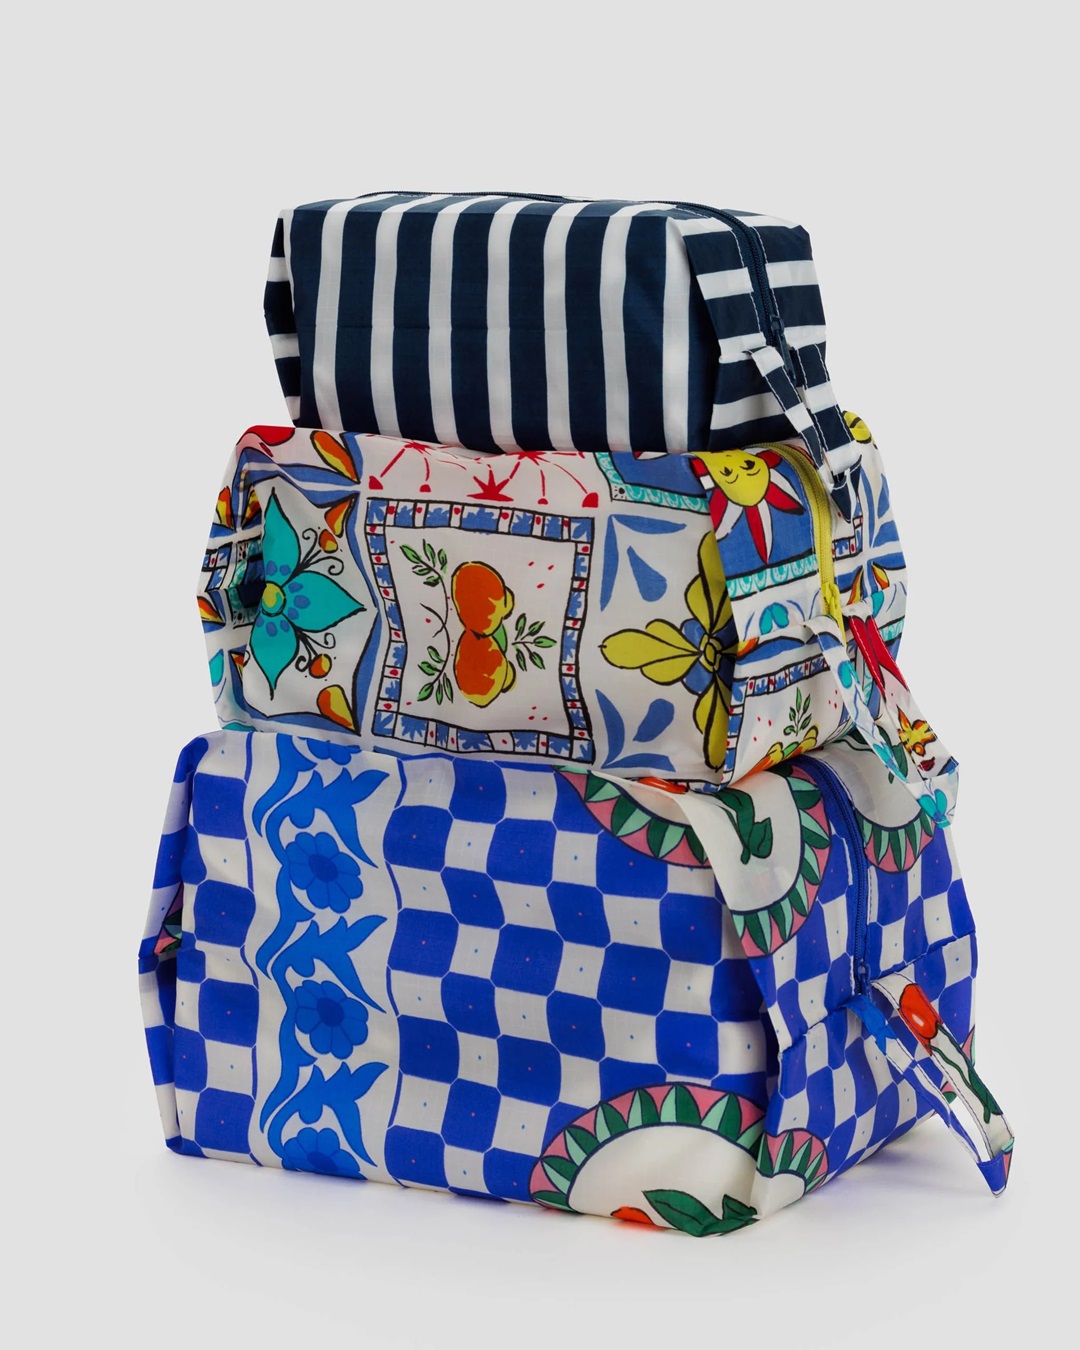 3D zip bags in multiple designs